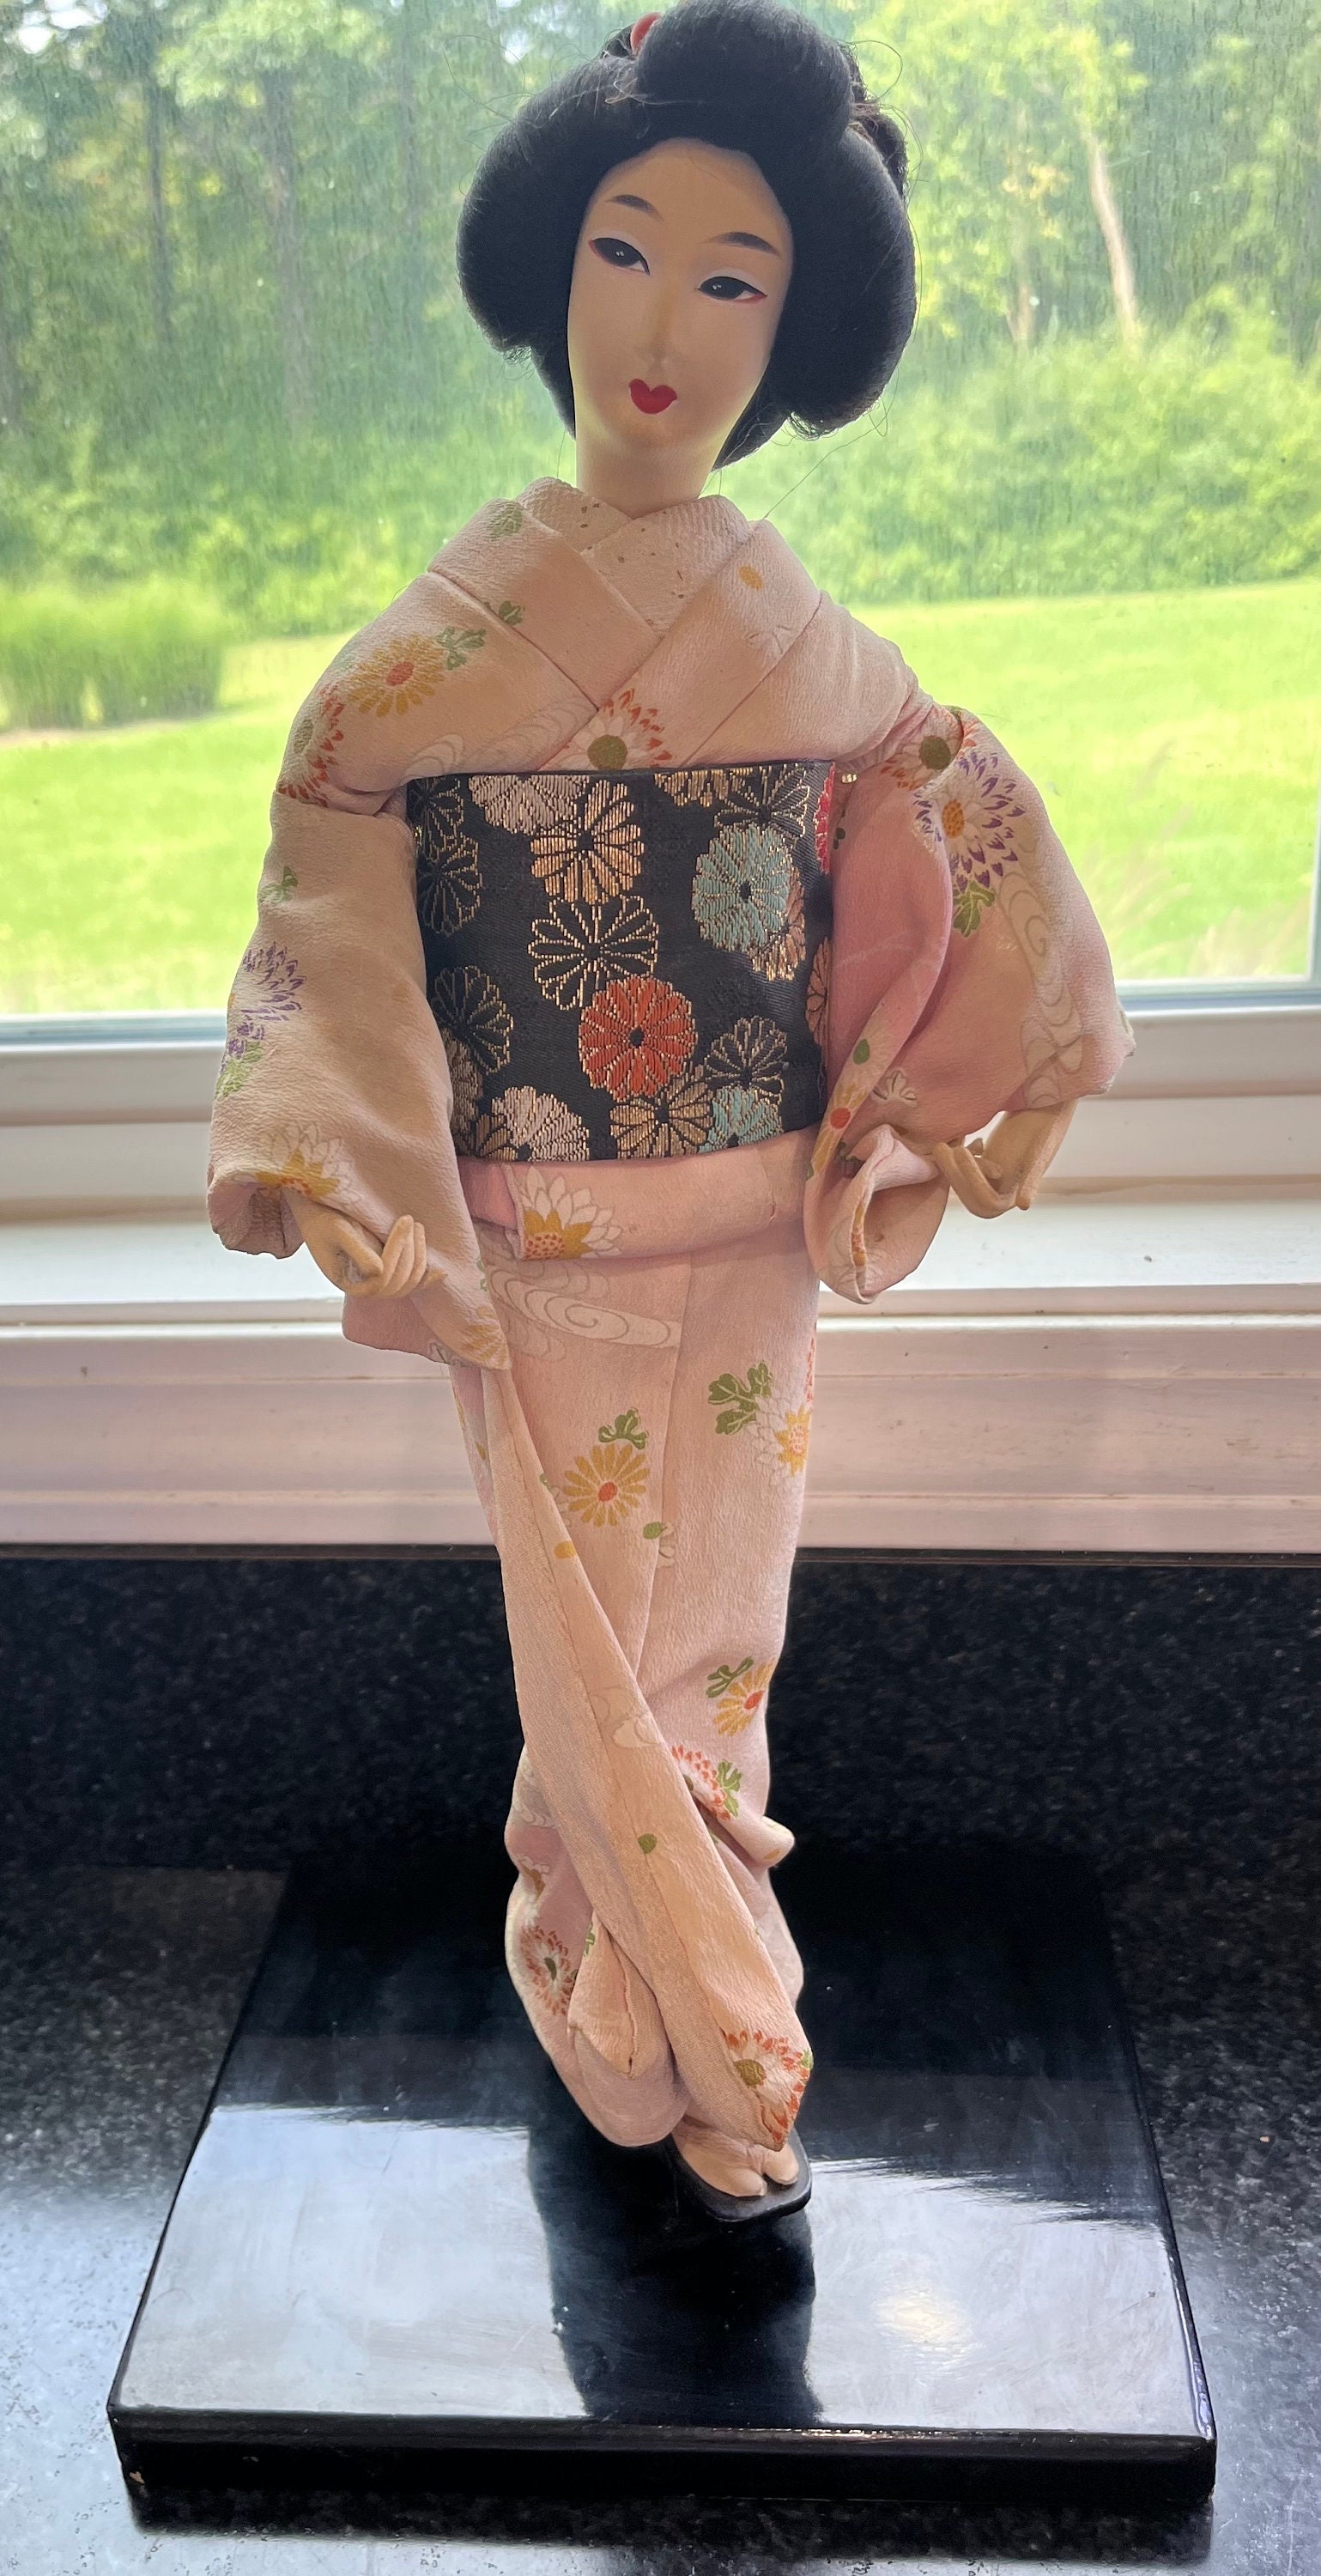 Momiji Doll, Japanese Kokeshi Doll, Made in Japan, Japanese